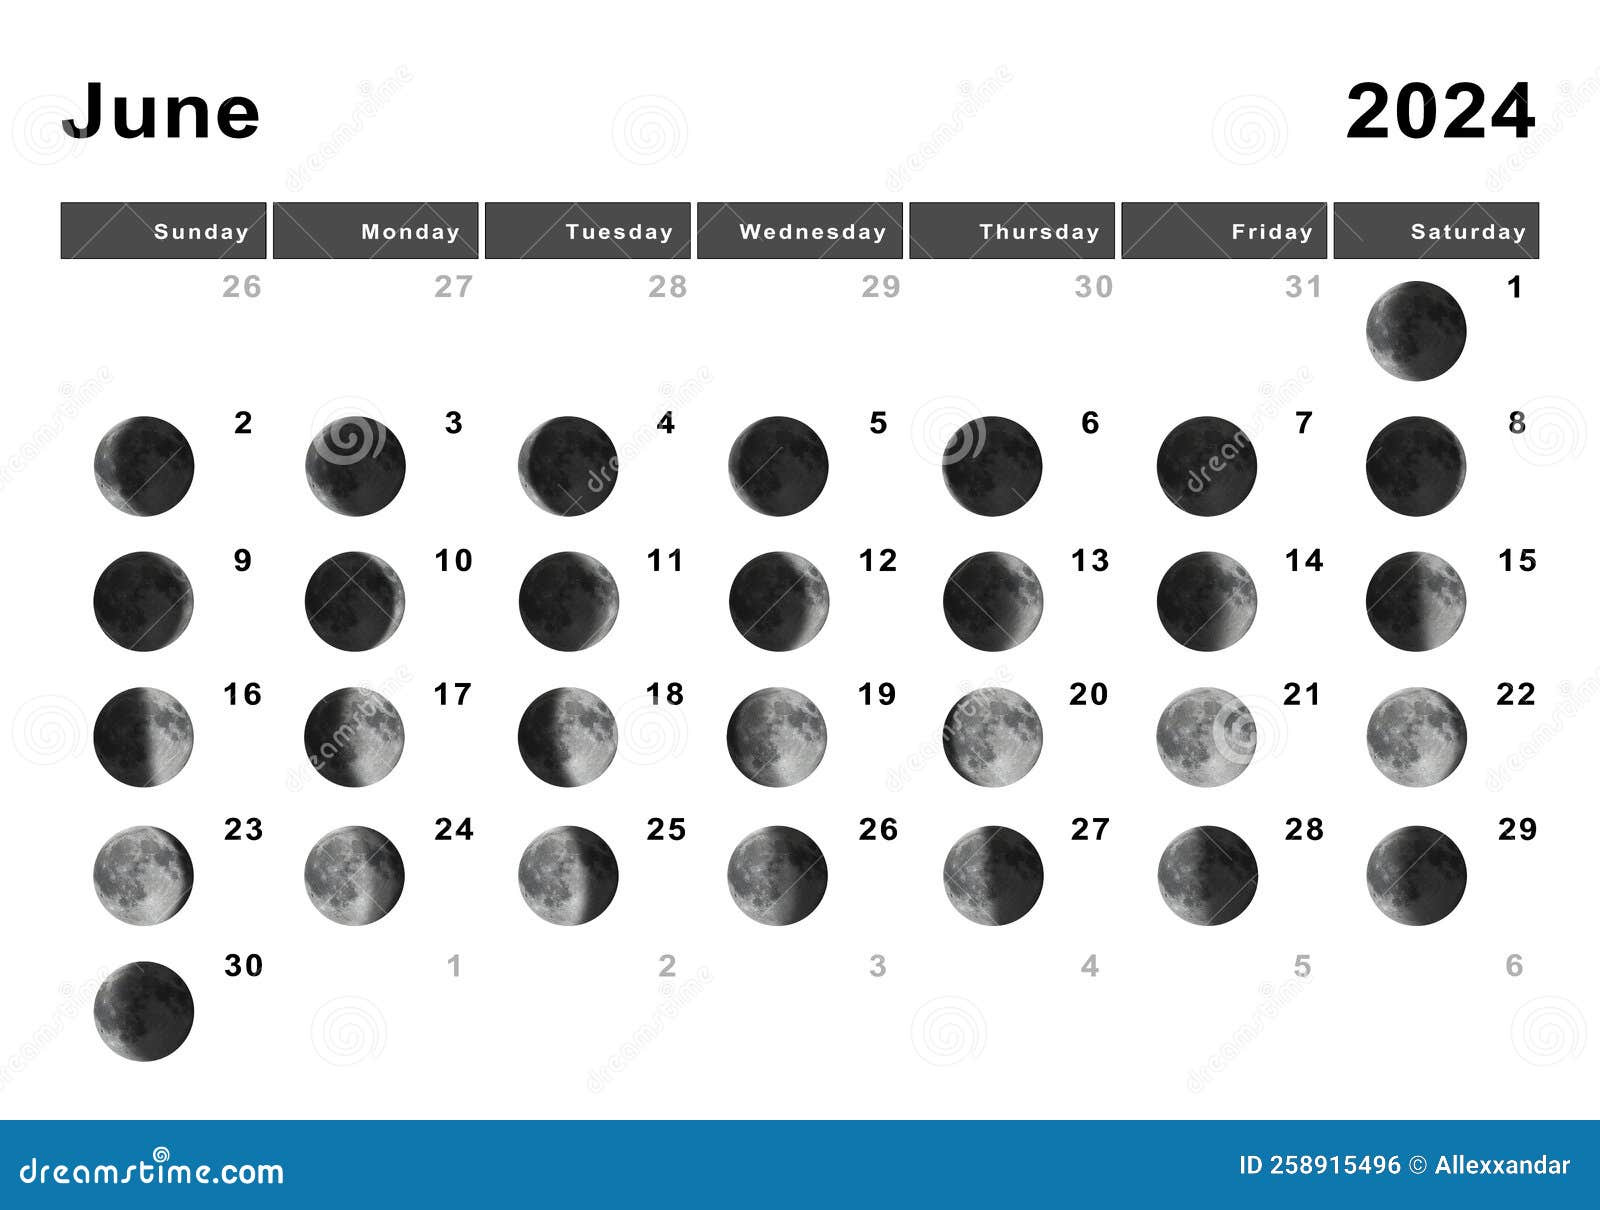 June 2024 Lunar Calendar, Moon Cycles Stock Illustration with Moon Calendar For June 2024